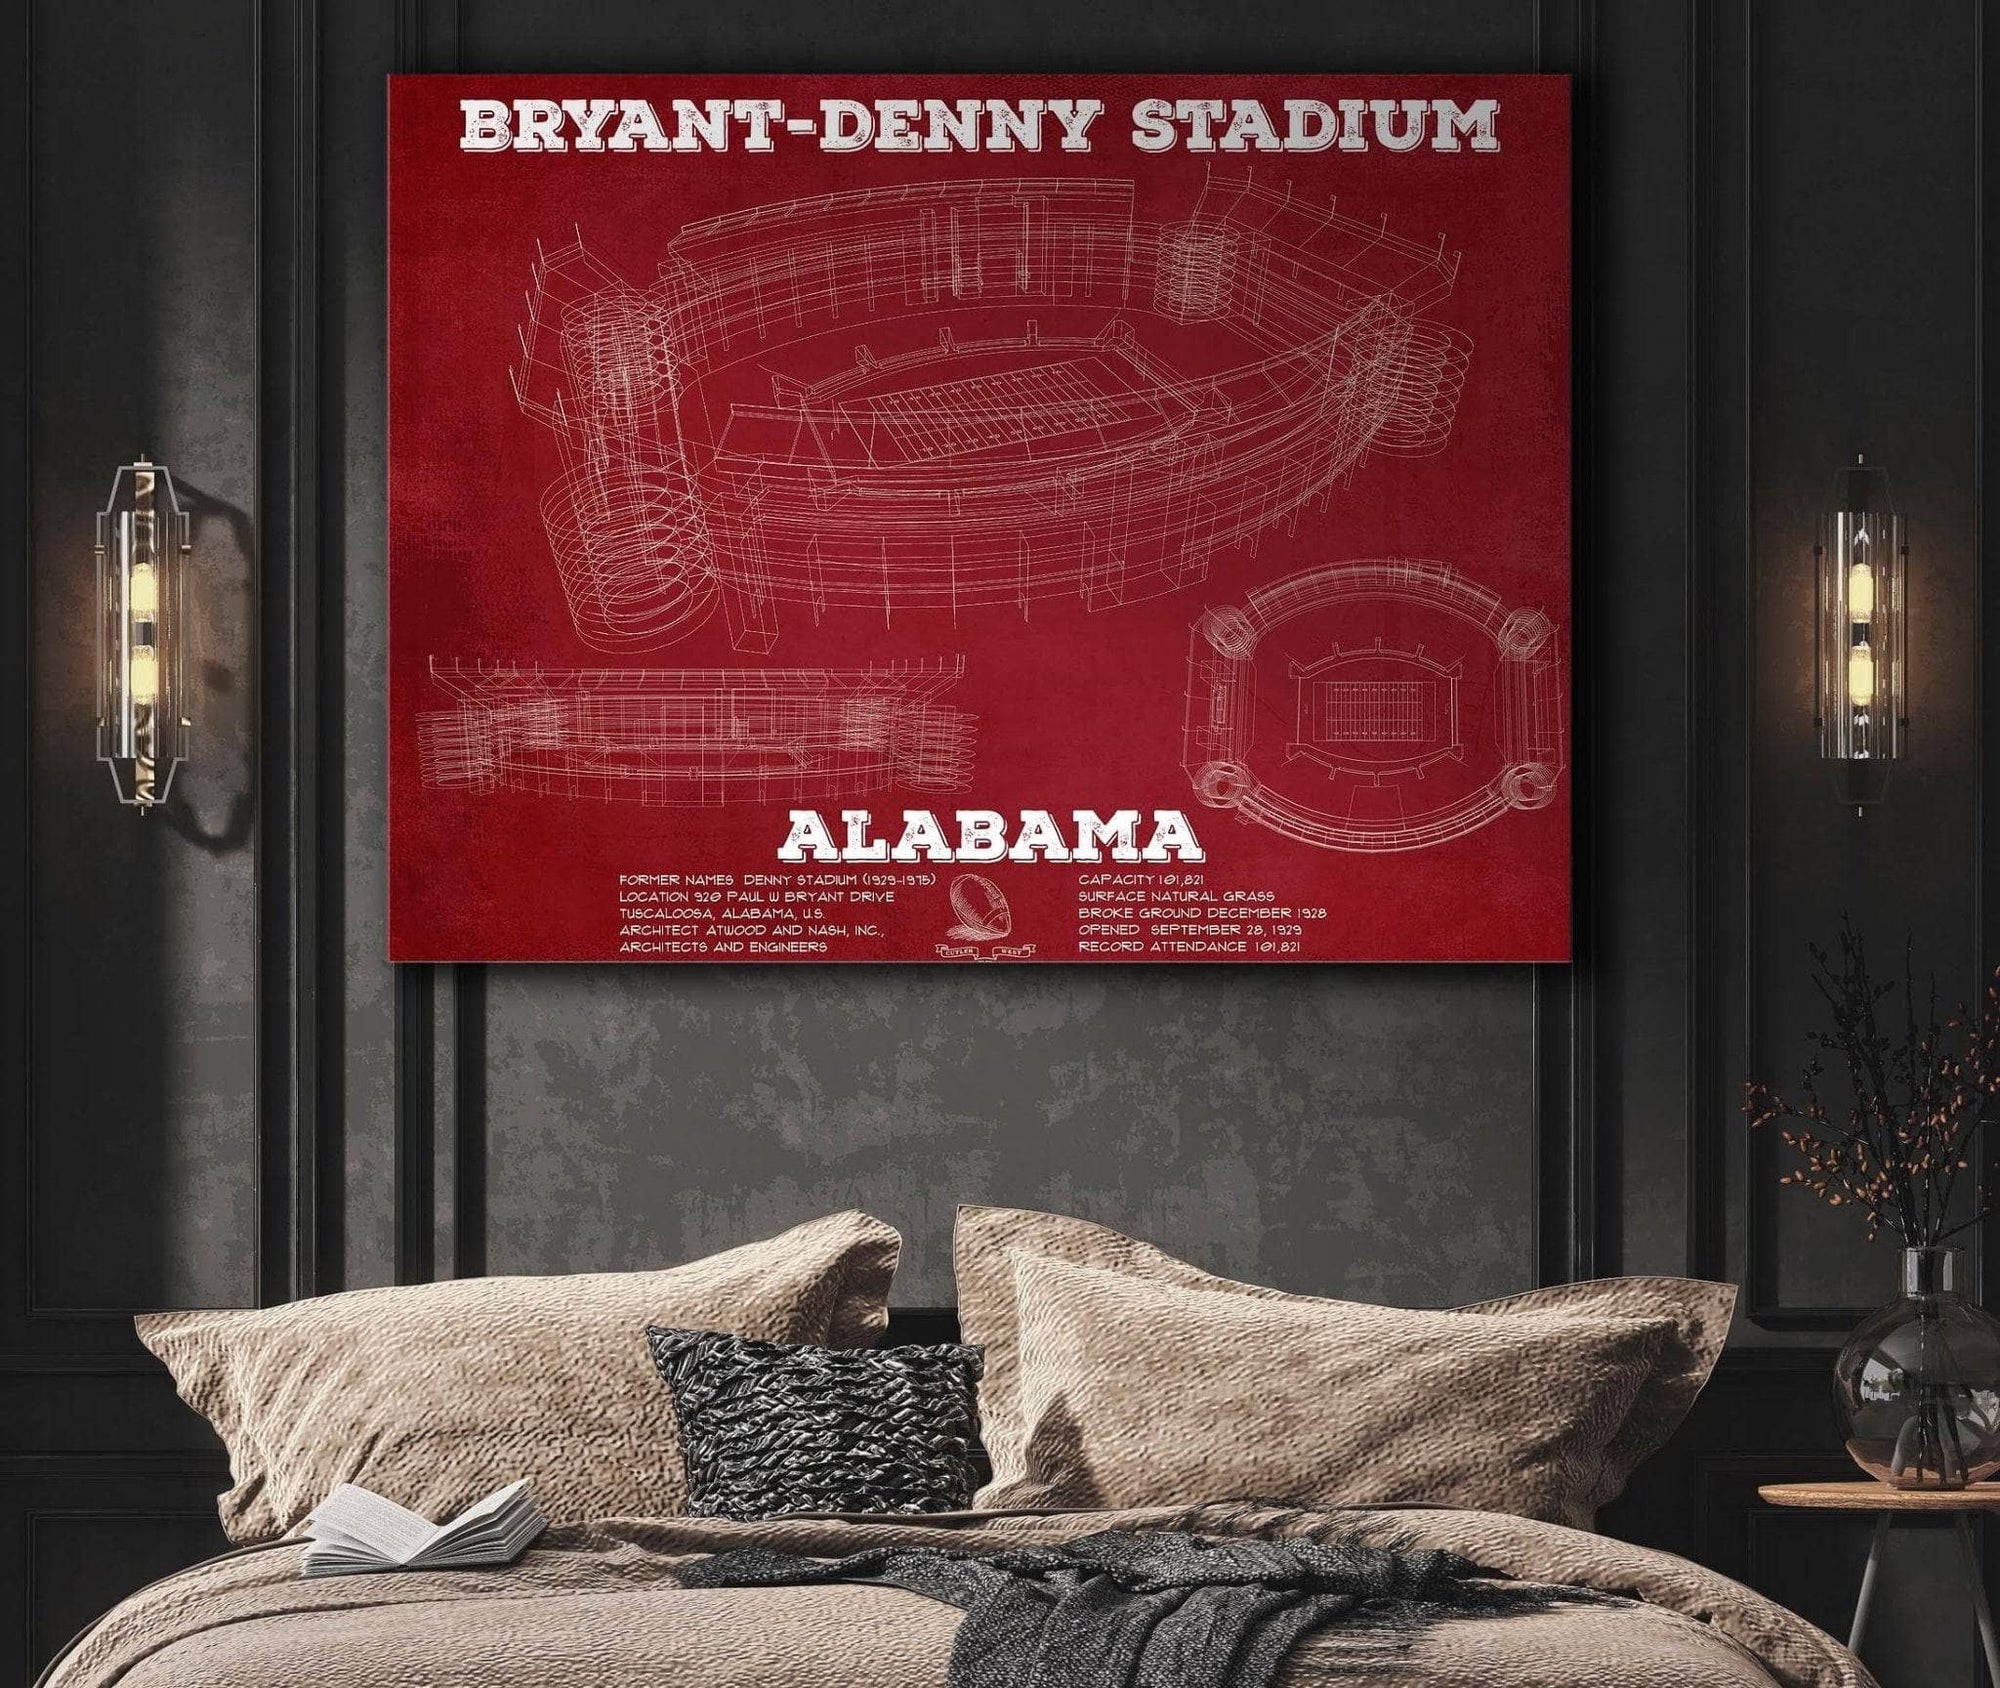 Bryant-Denny Stadium Archives - Stadium Blueprint Company